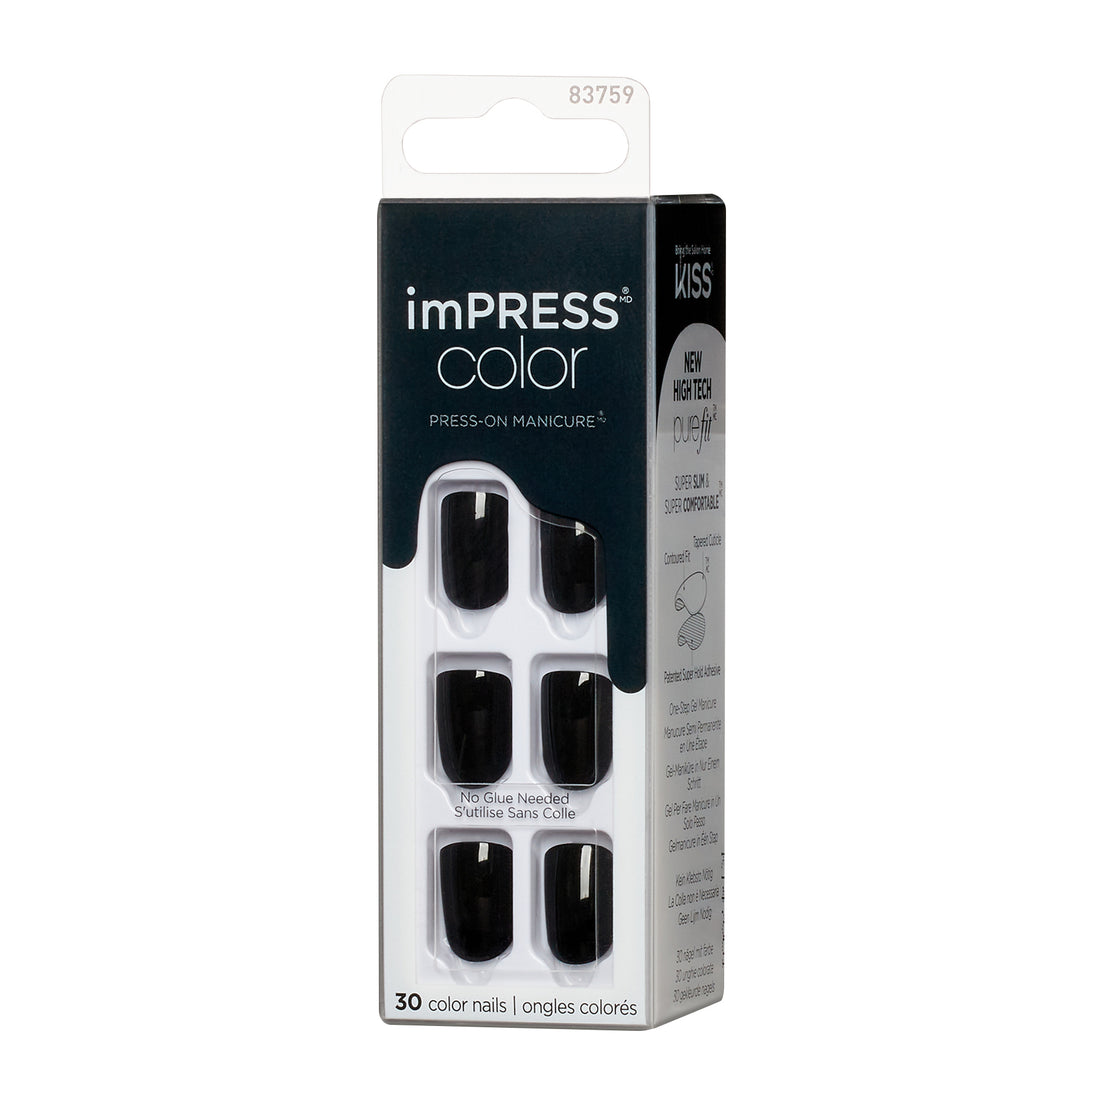 imPRESS Color Press-On Nails- All Black